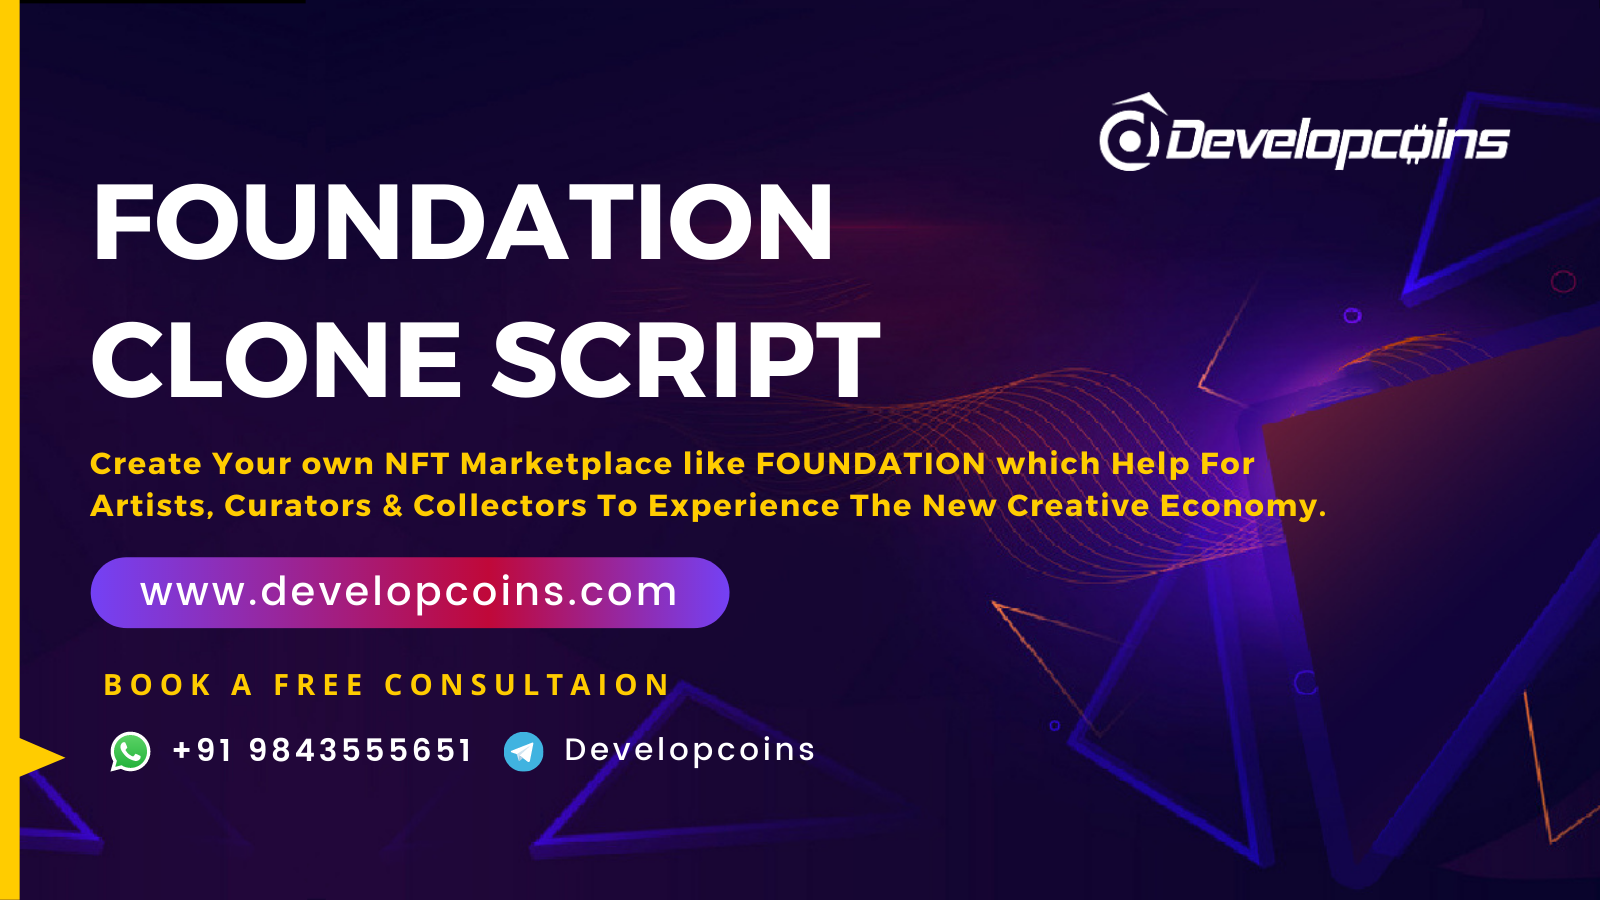 Foundation Clone Script To Create NFT Marketplace Like Foundation